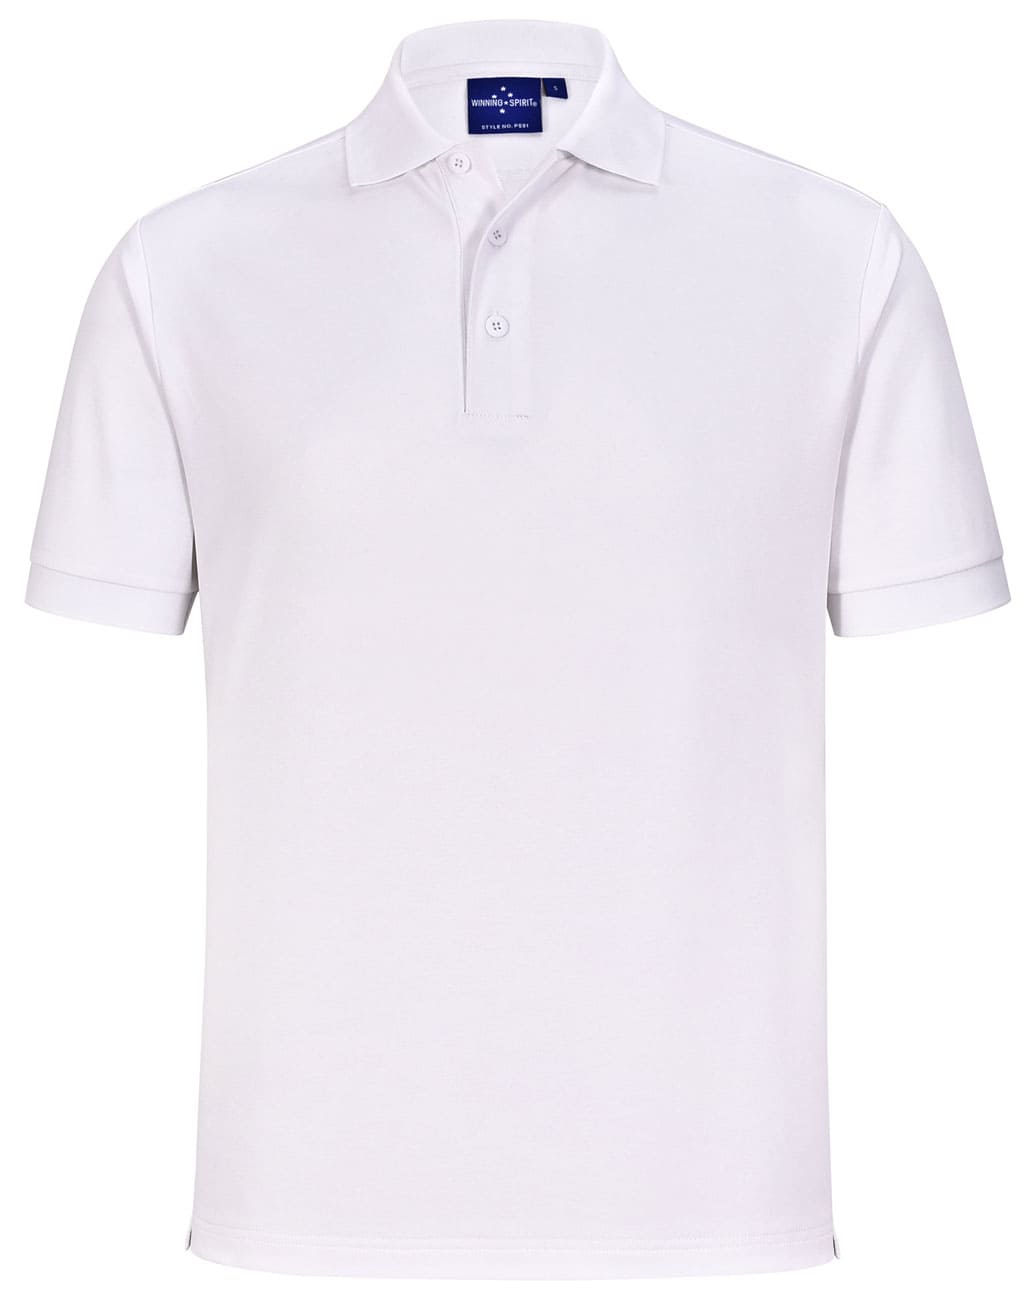 Custom Mens (Black) Corporate Branded Polo Shirts Online Perth Australia